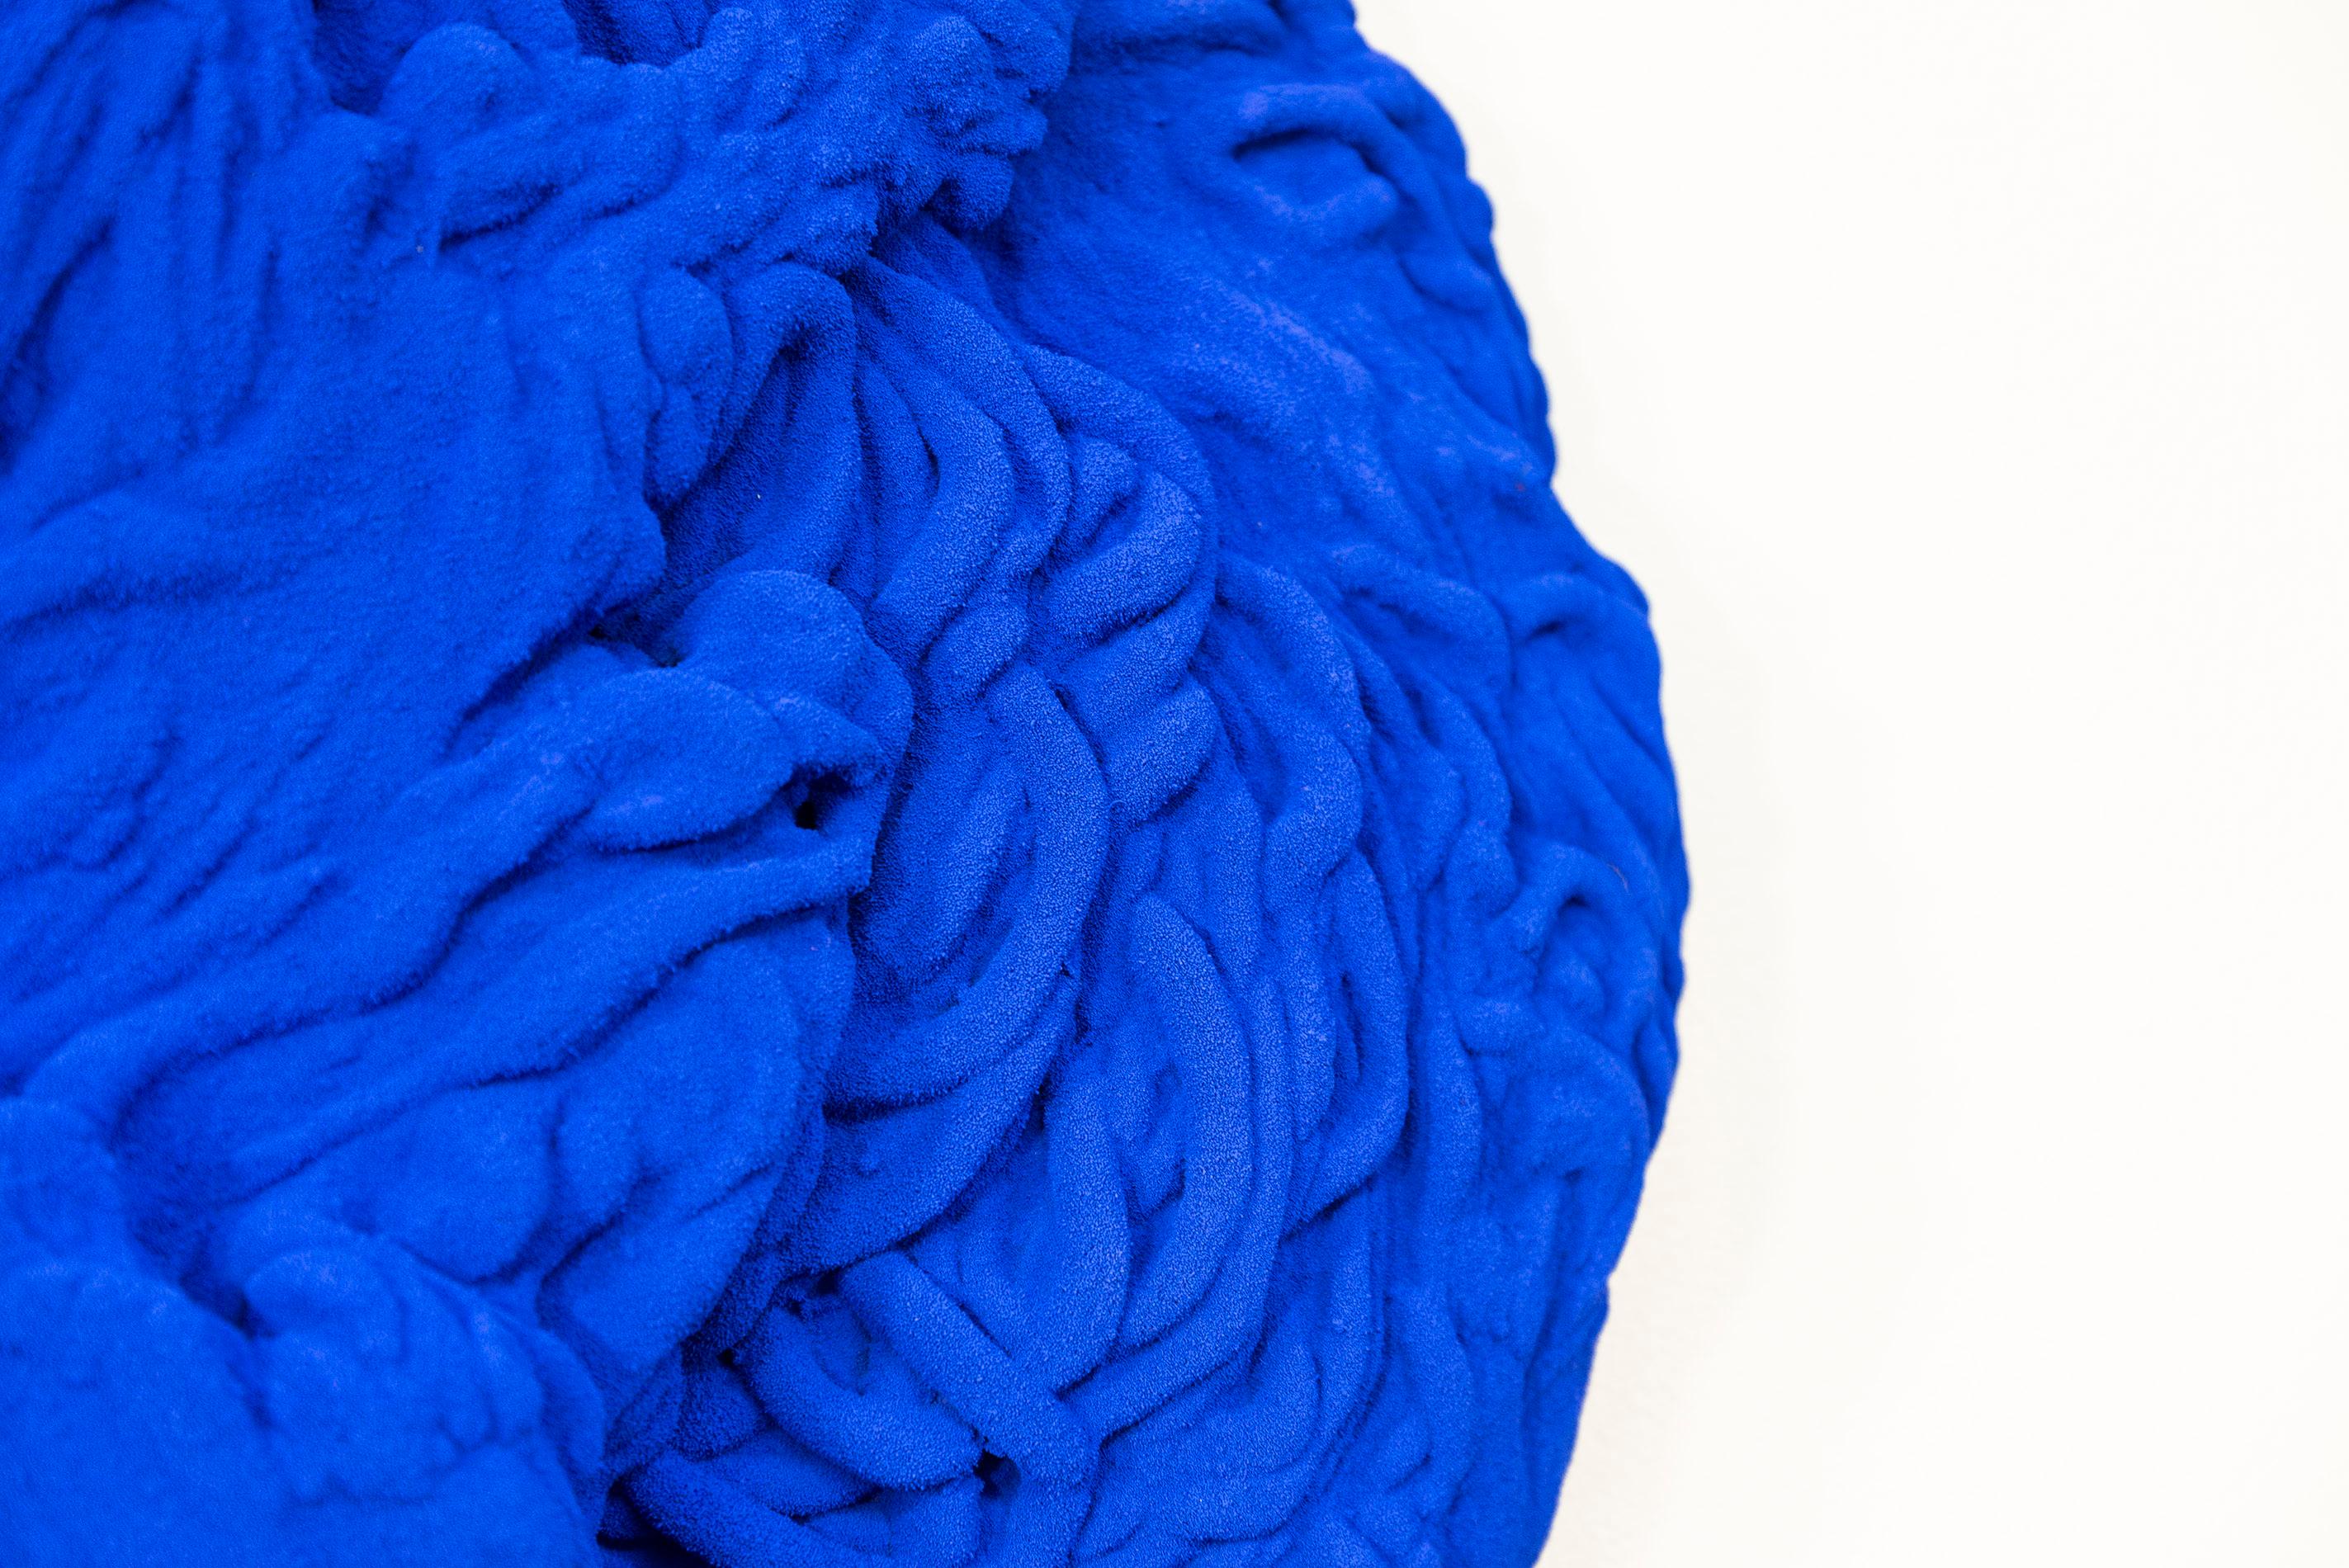 Blue Matter 2 - matte, blue, textured, abstract, mixed media wall sculpture For Sale 4